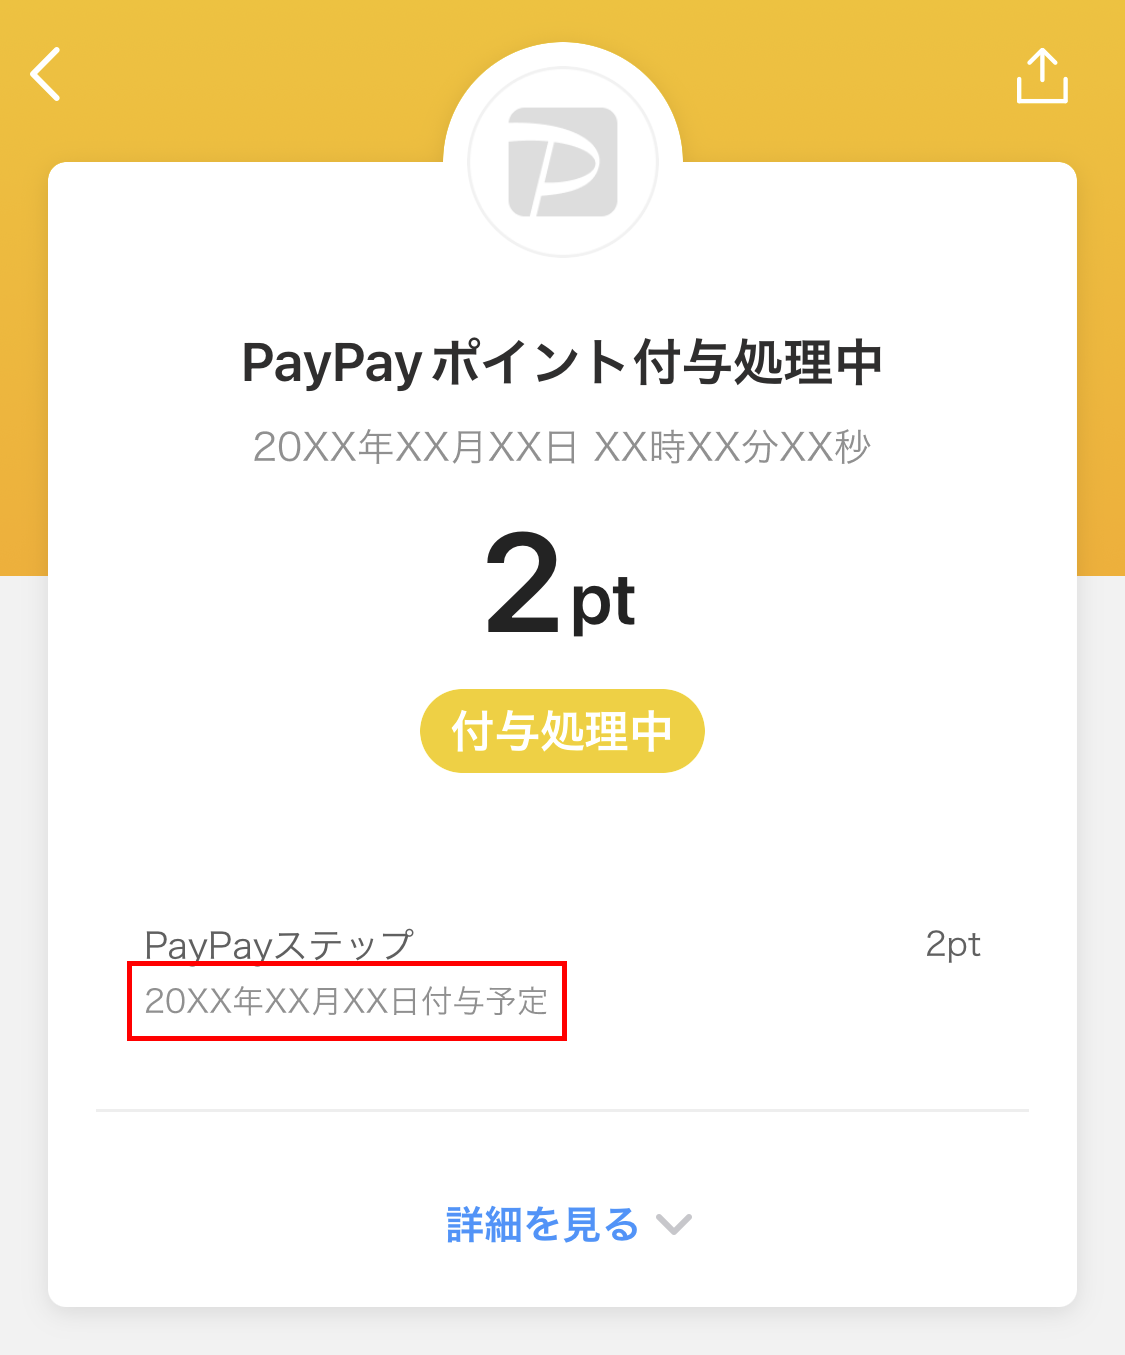 PayPay残高付与の処理中からPayPay残高GET画面